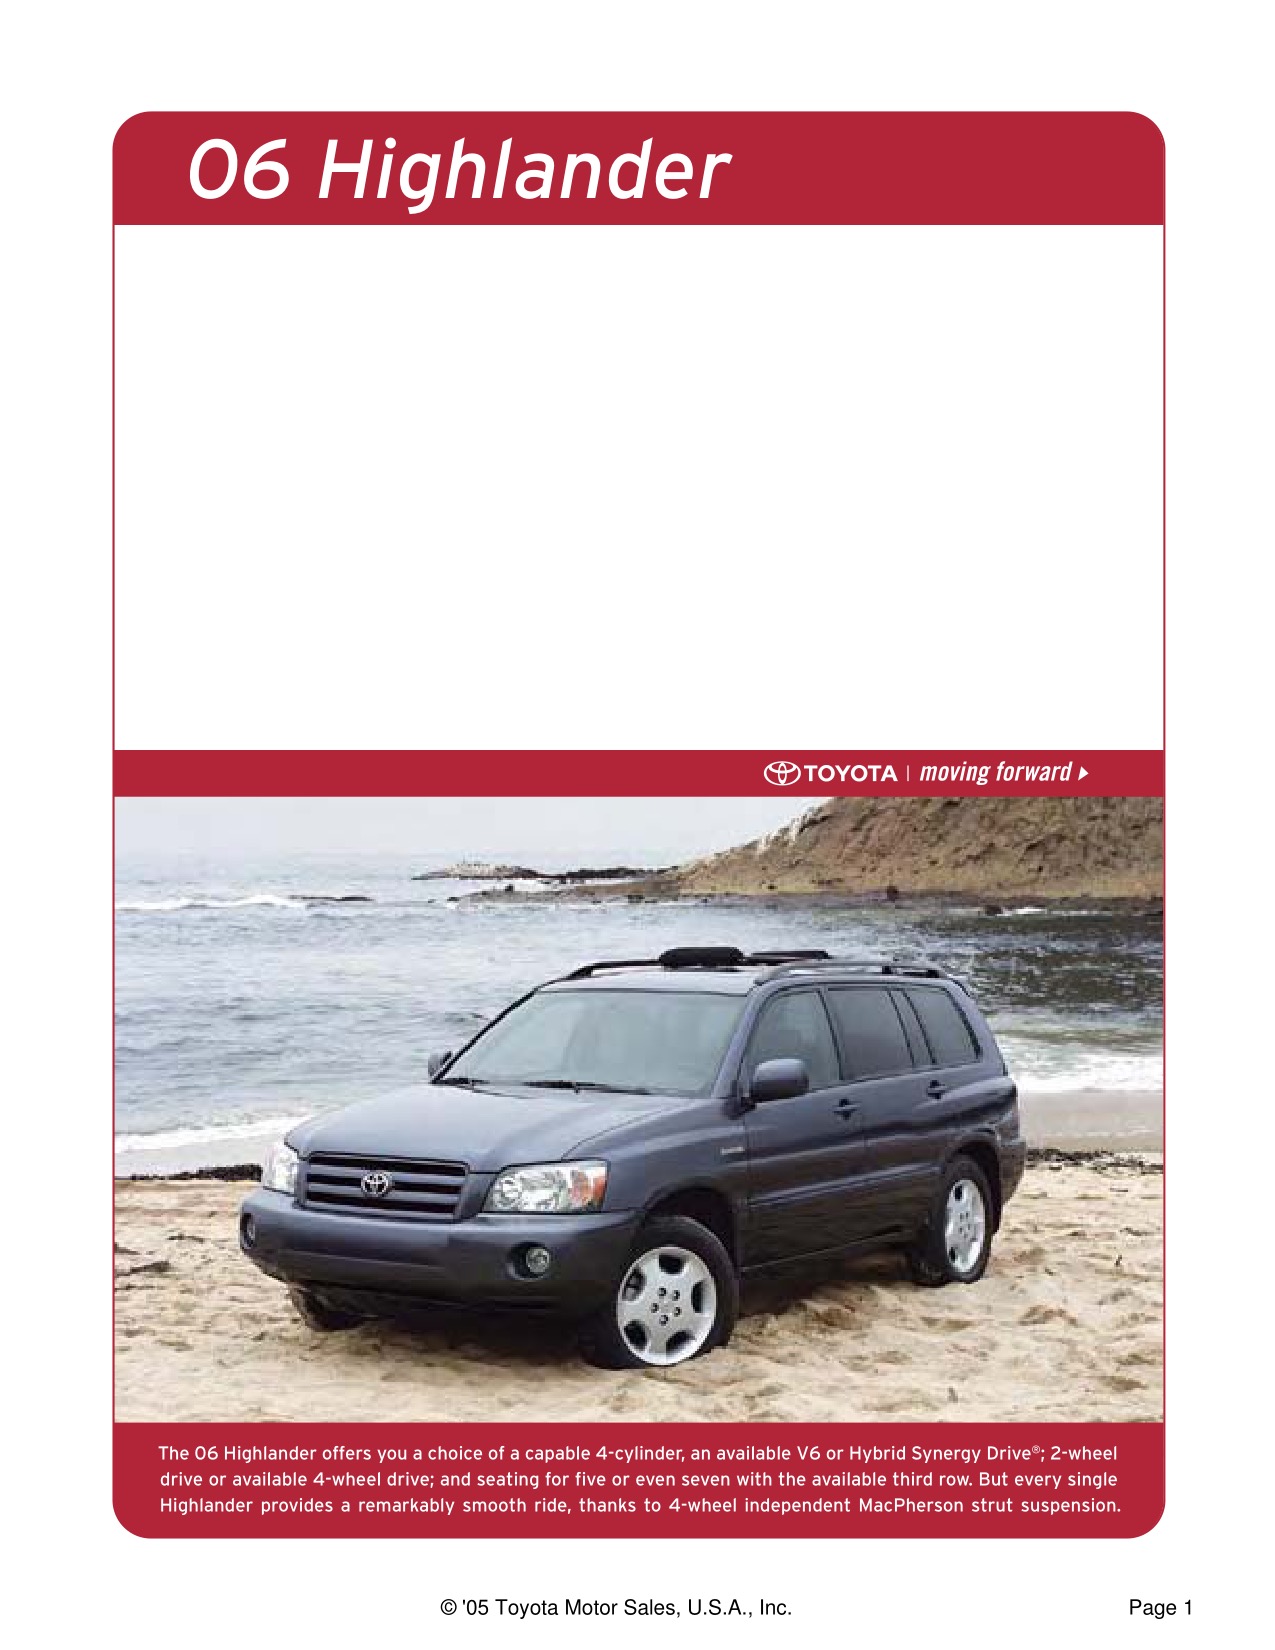 2006 Toyota Highlander Brochure